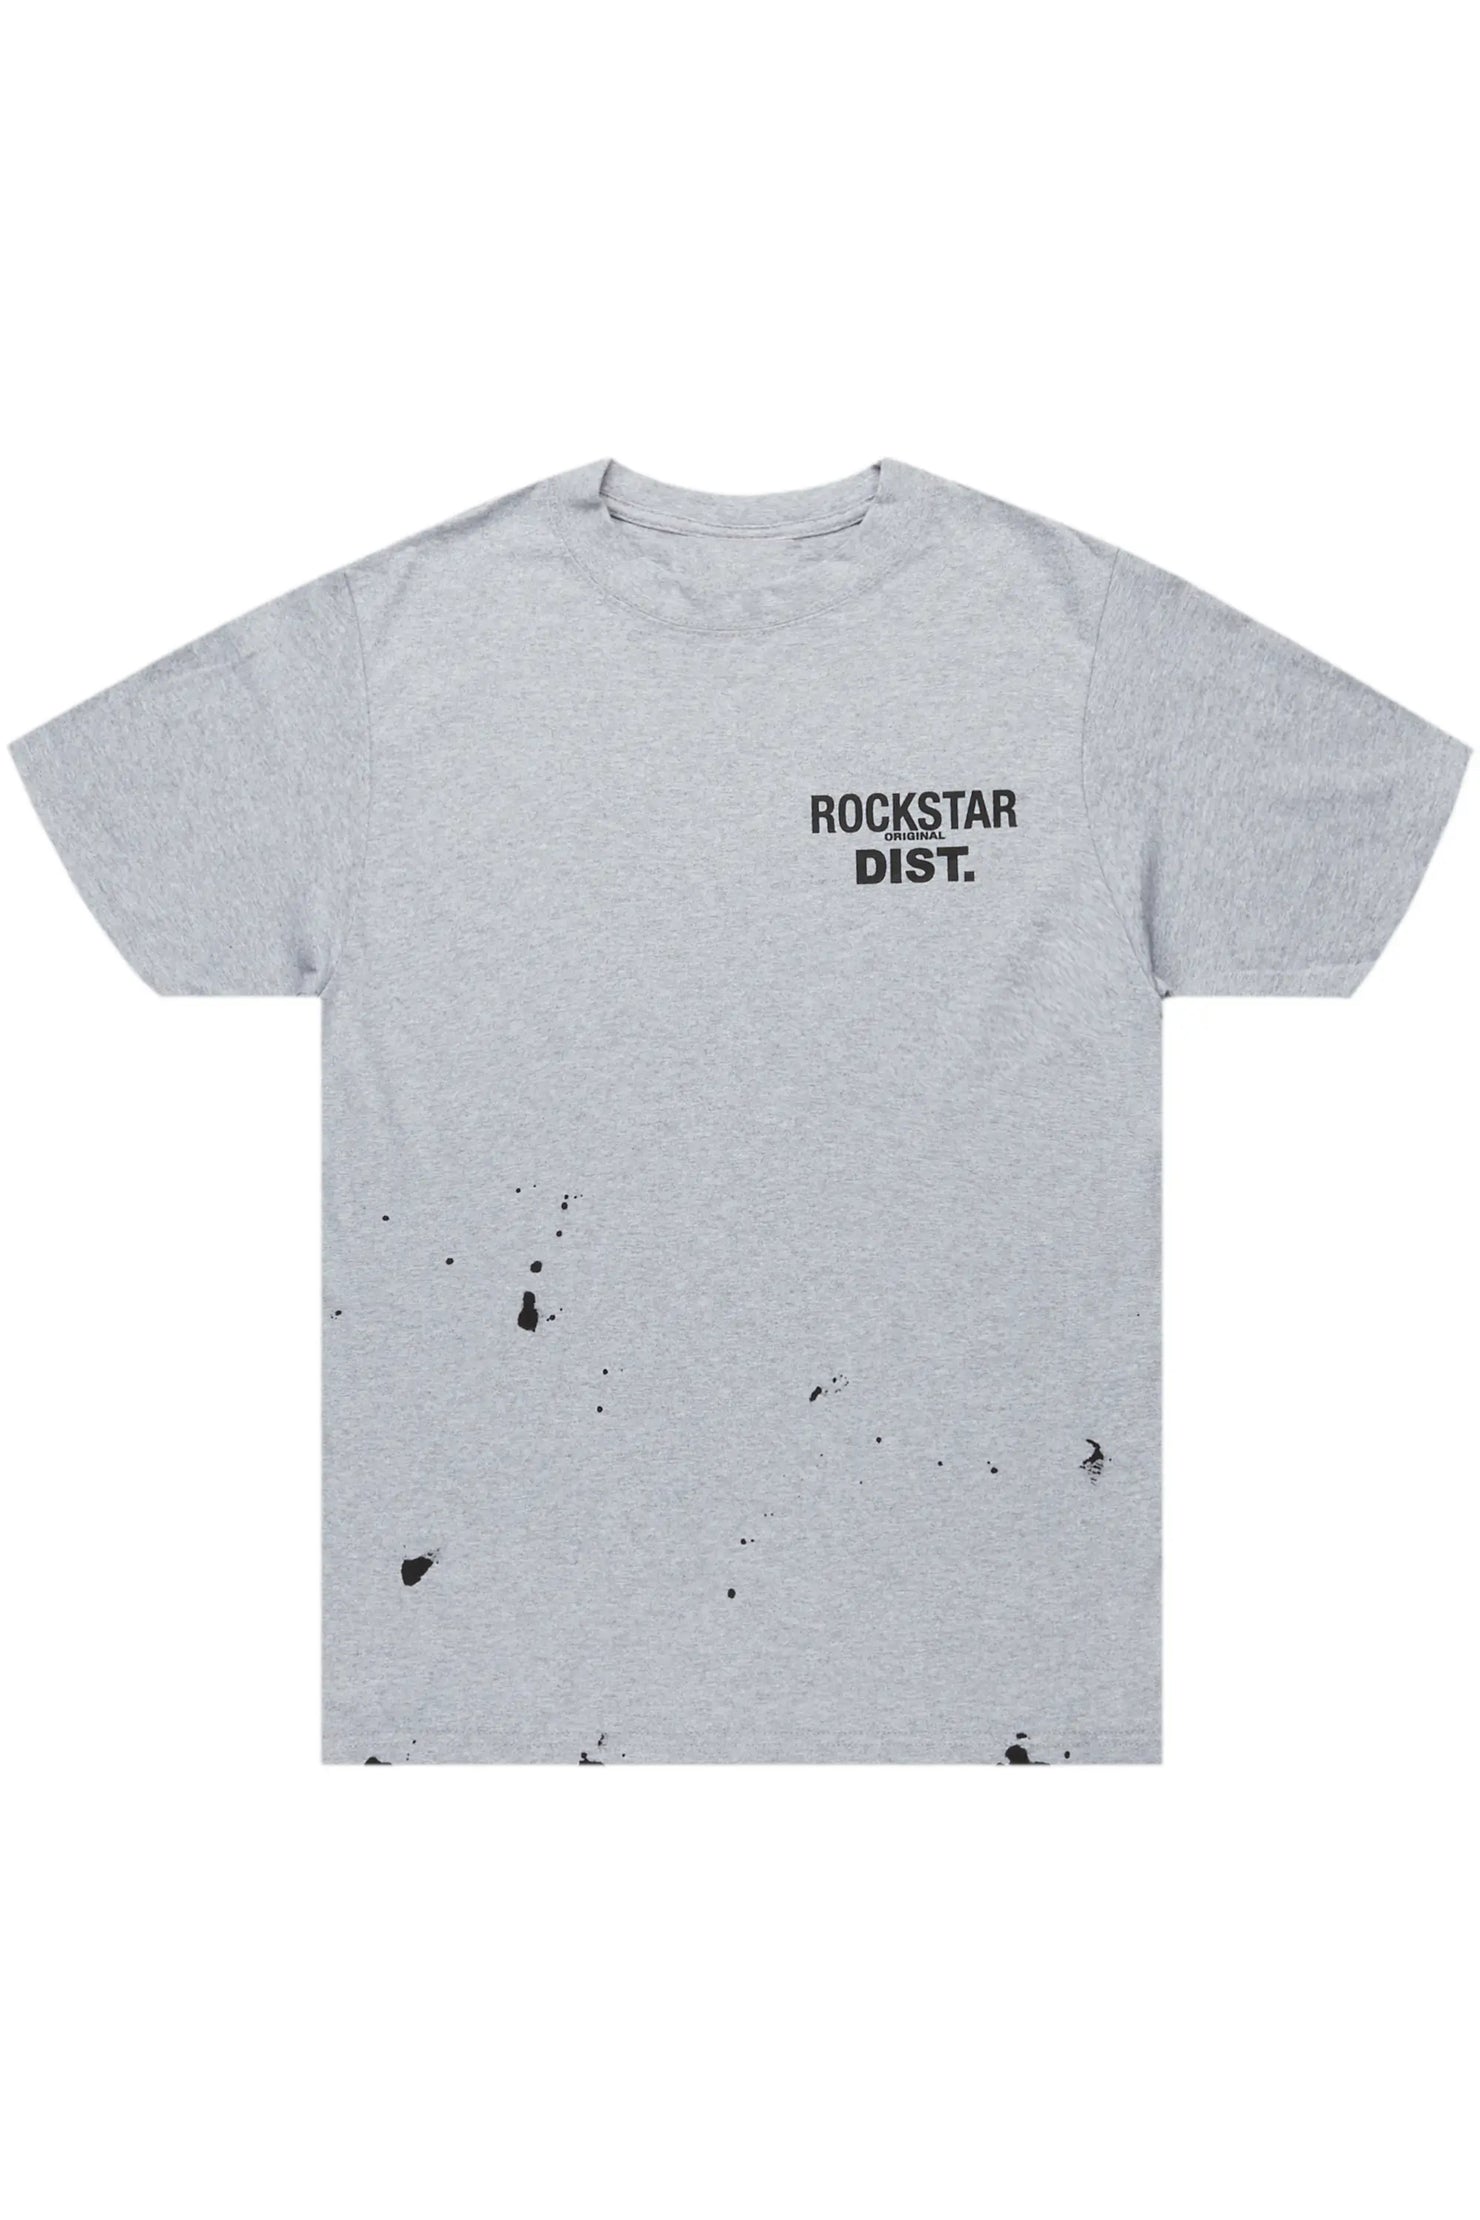 Raffer Grey Graphic T-Shirt